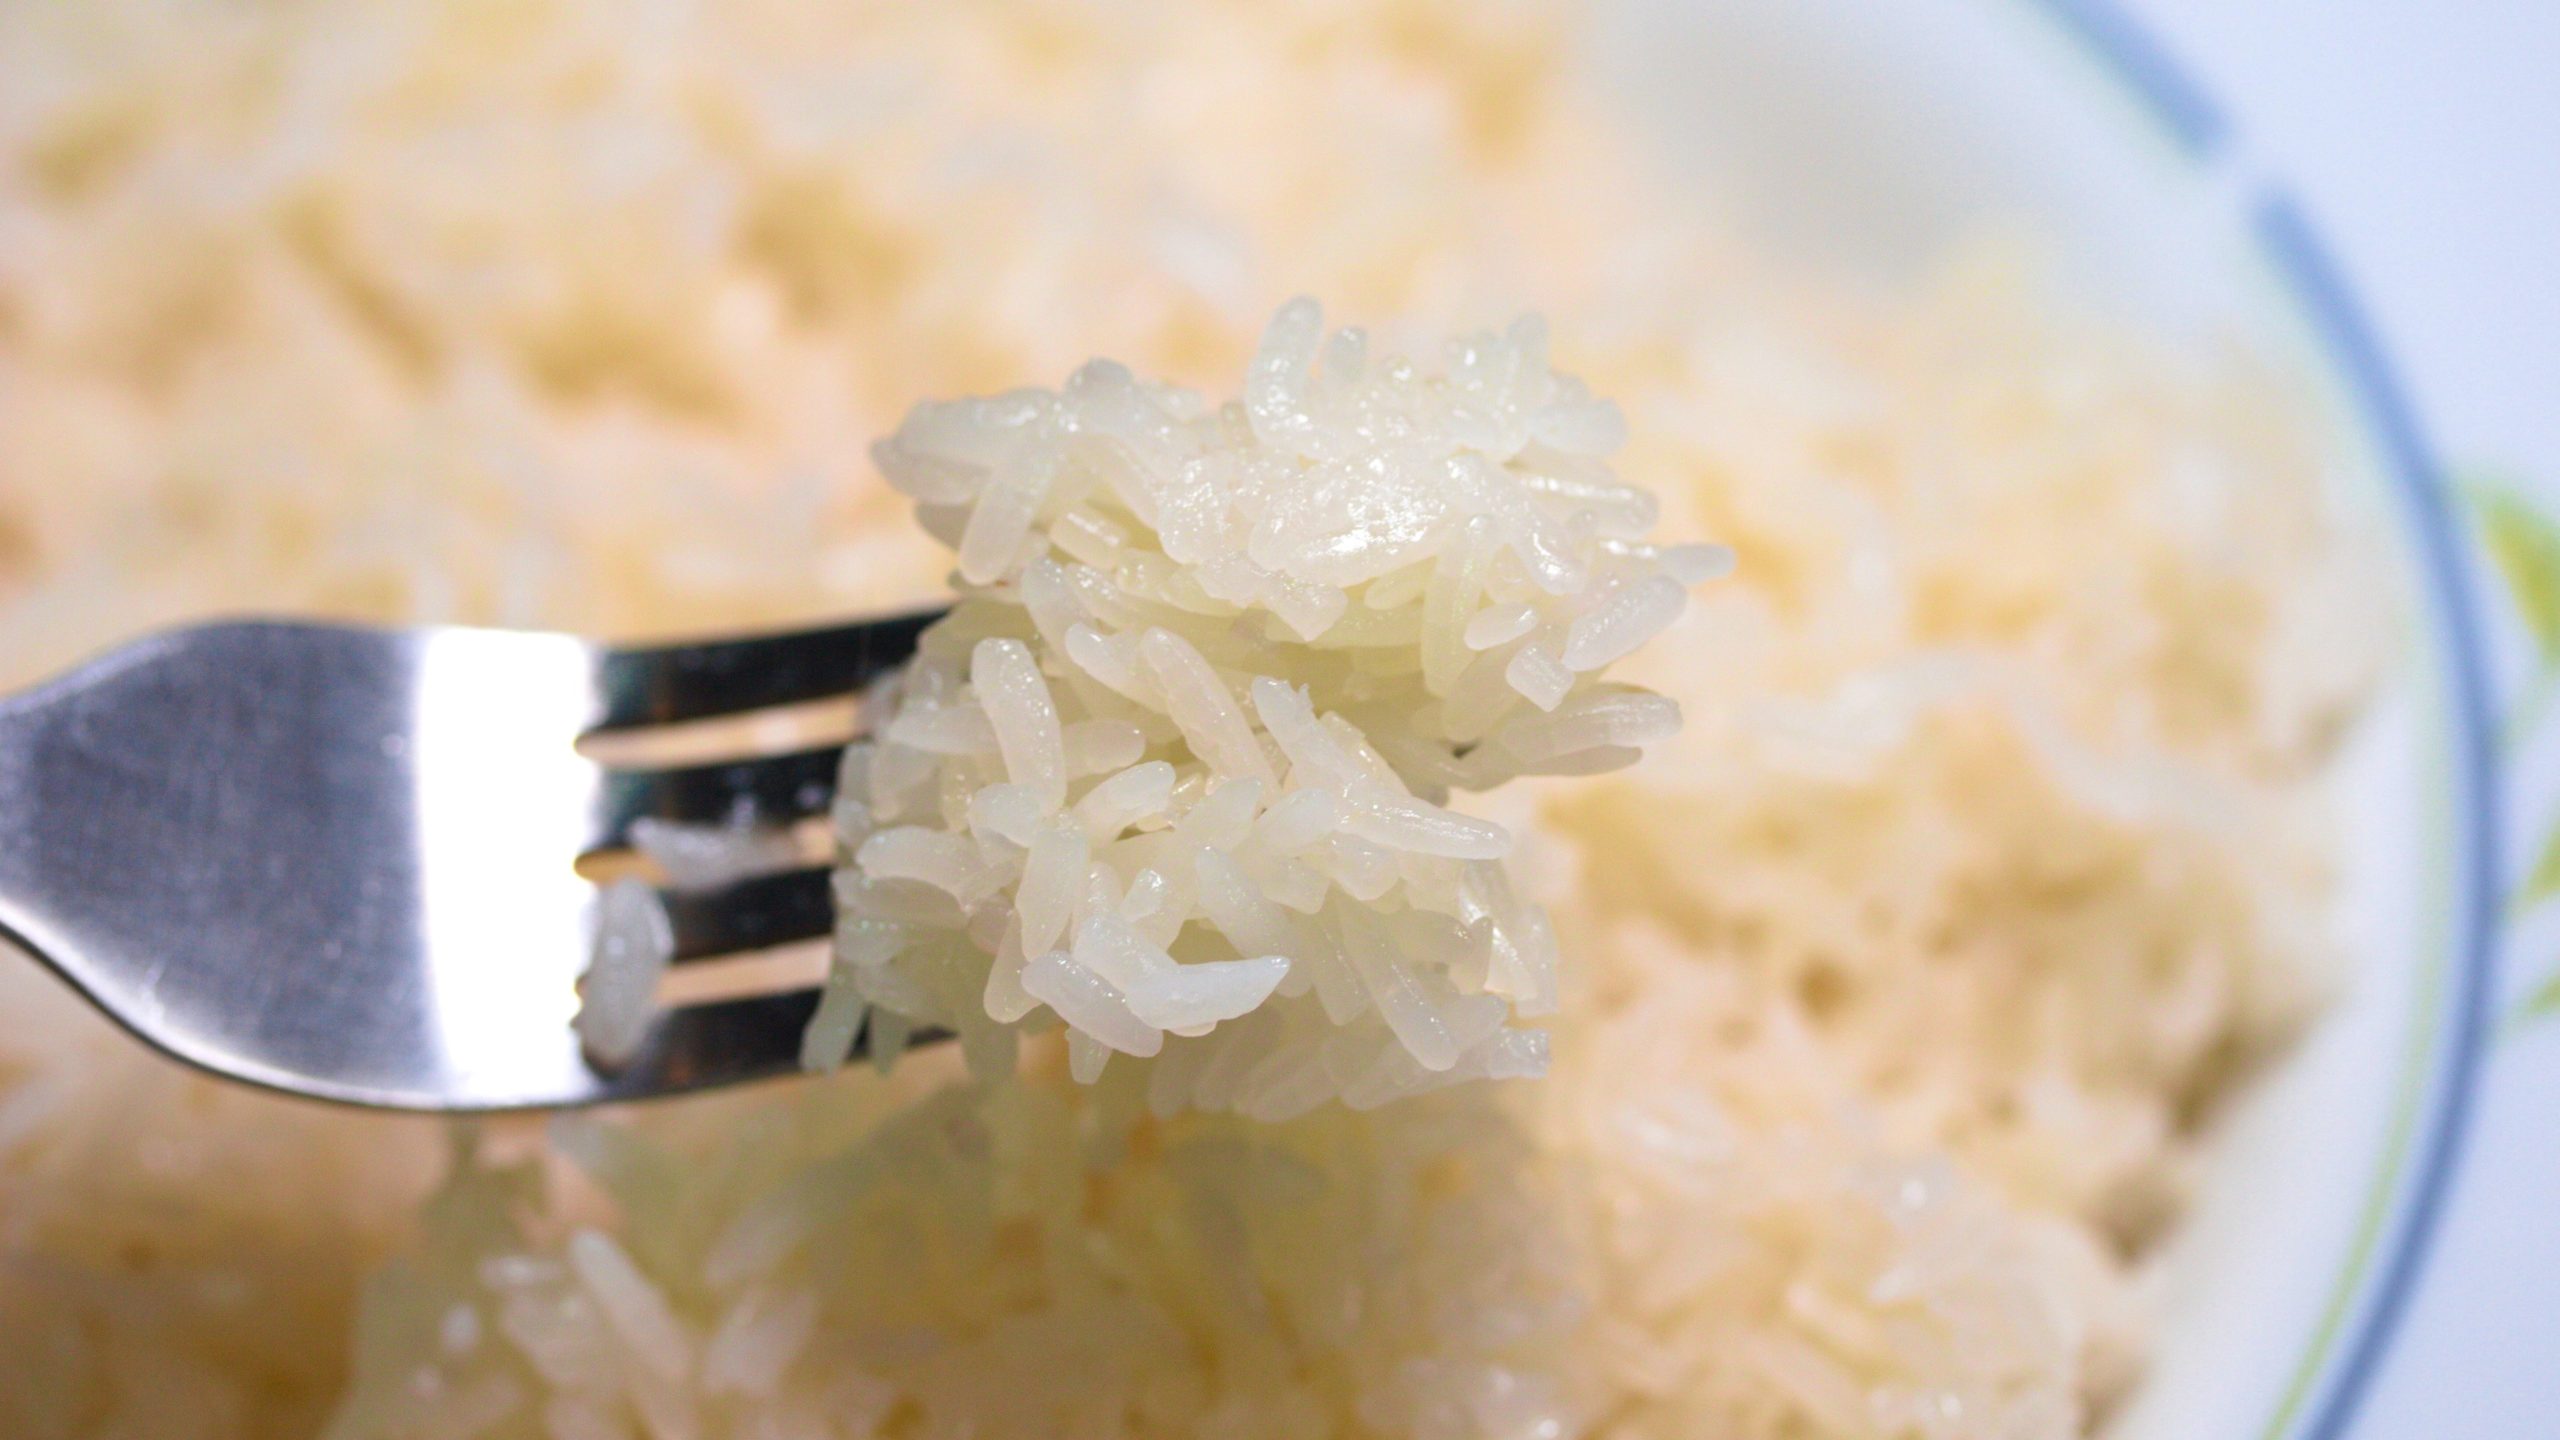 https://www.tastythais.com/wp-content/uploads/2019/09/grandmas-sticky-rice-cooked-scaled.jpg